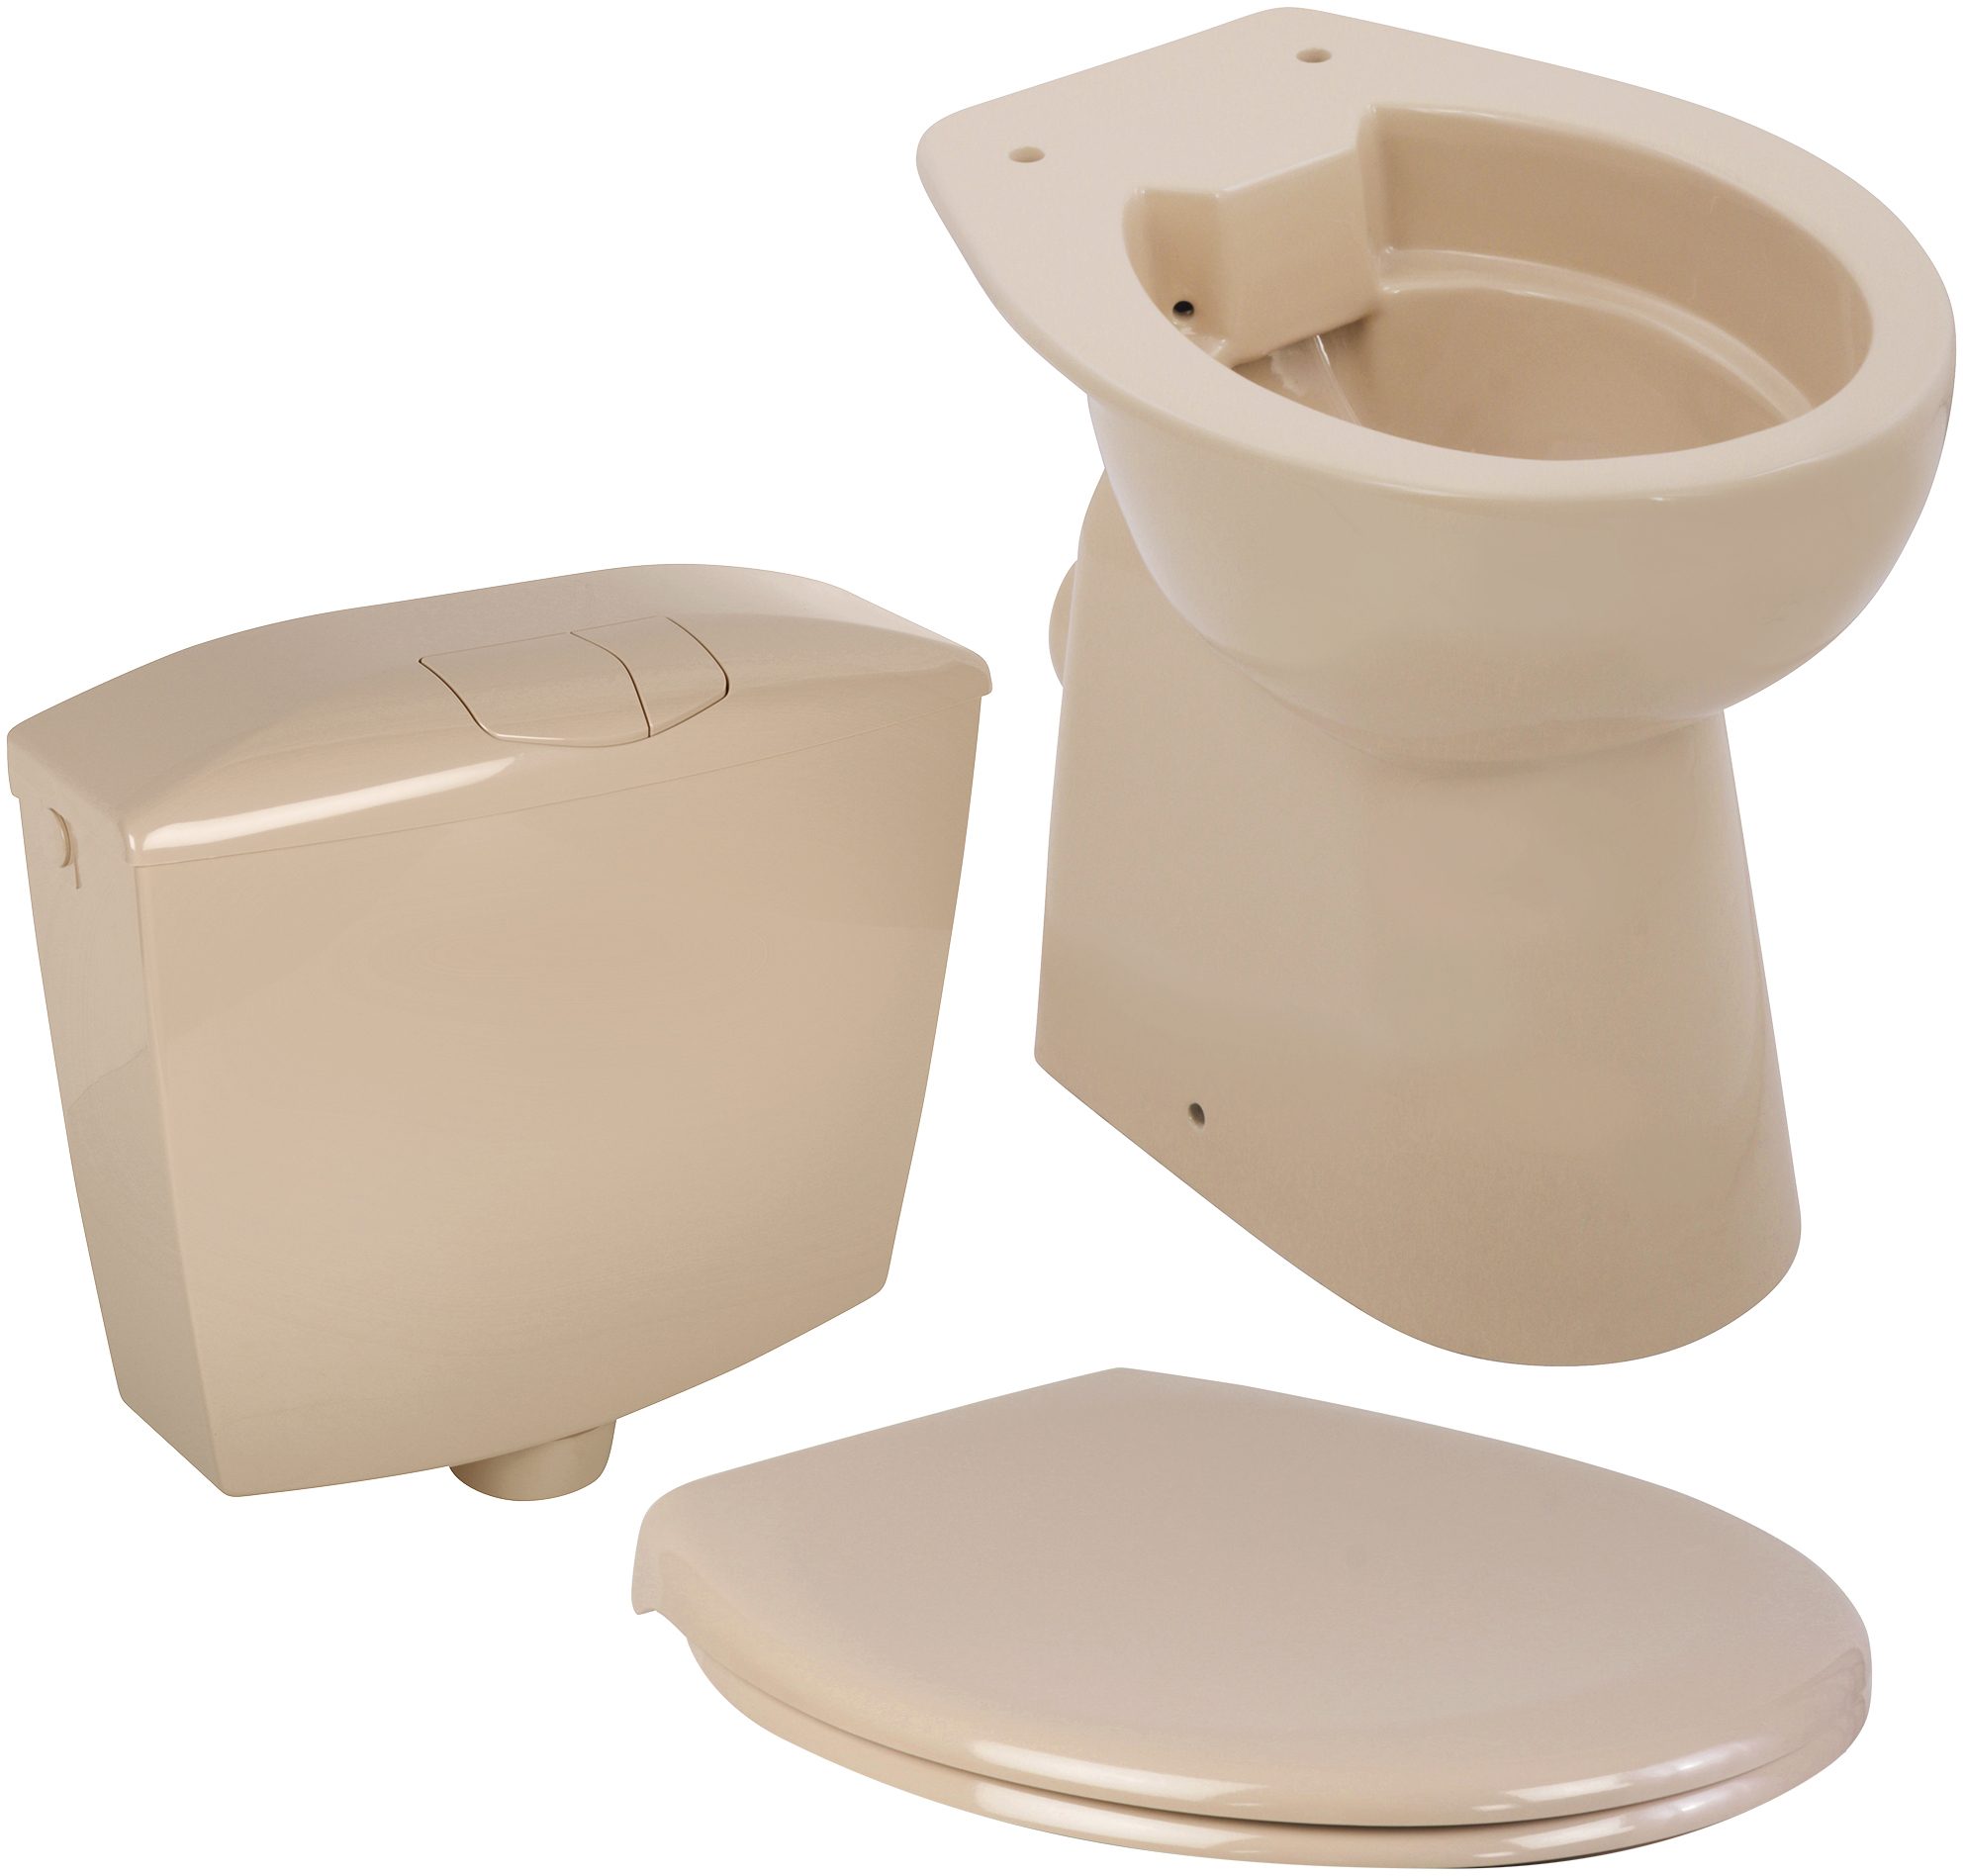 Komplett-Set spülrandloses Stand-WC Elements Wellness, erhöht +7 cm, Beige, mit WC-Sitz, Spülkasten